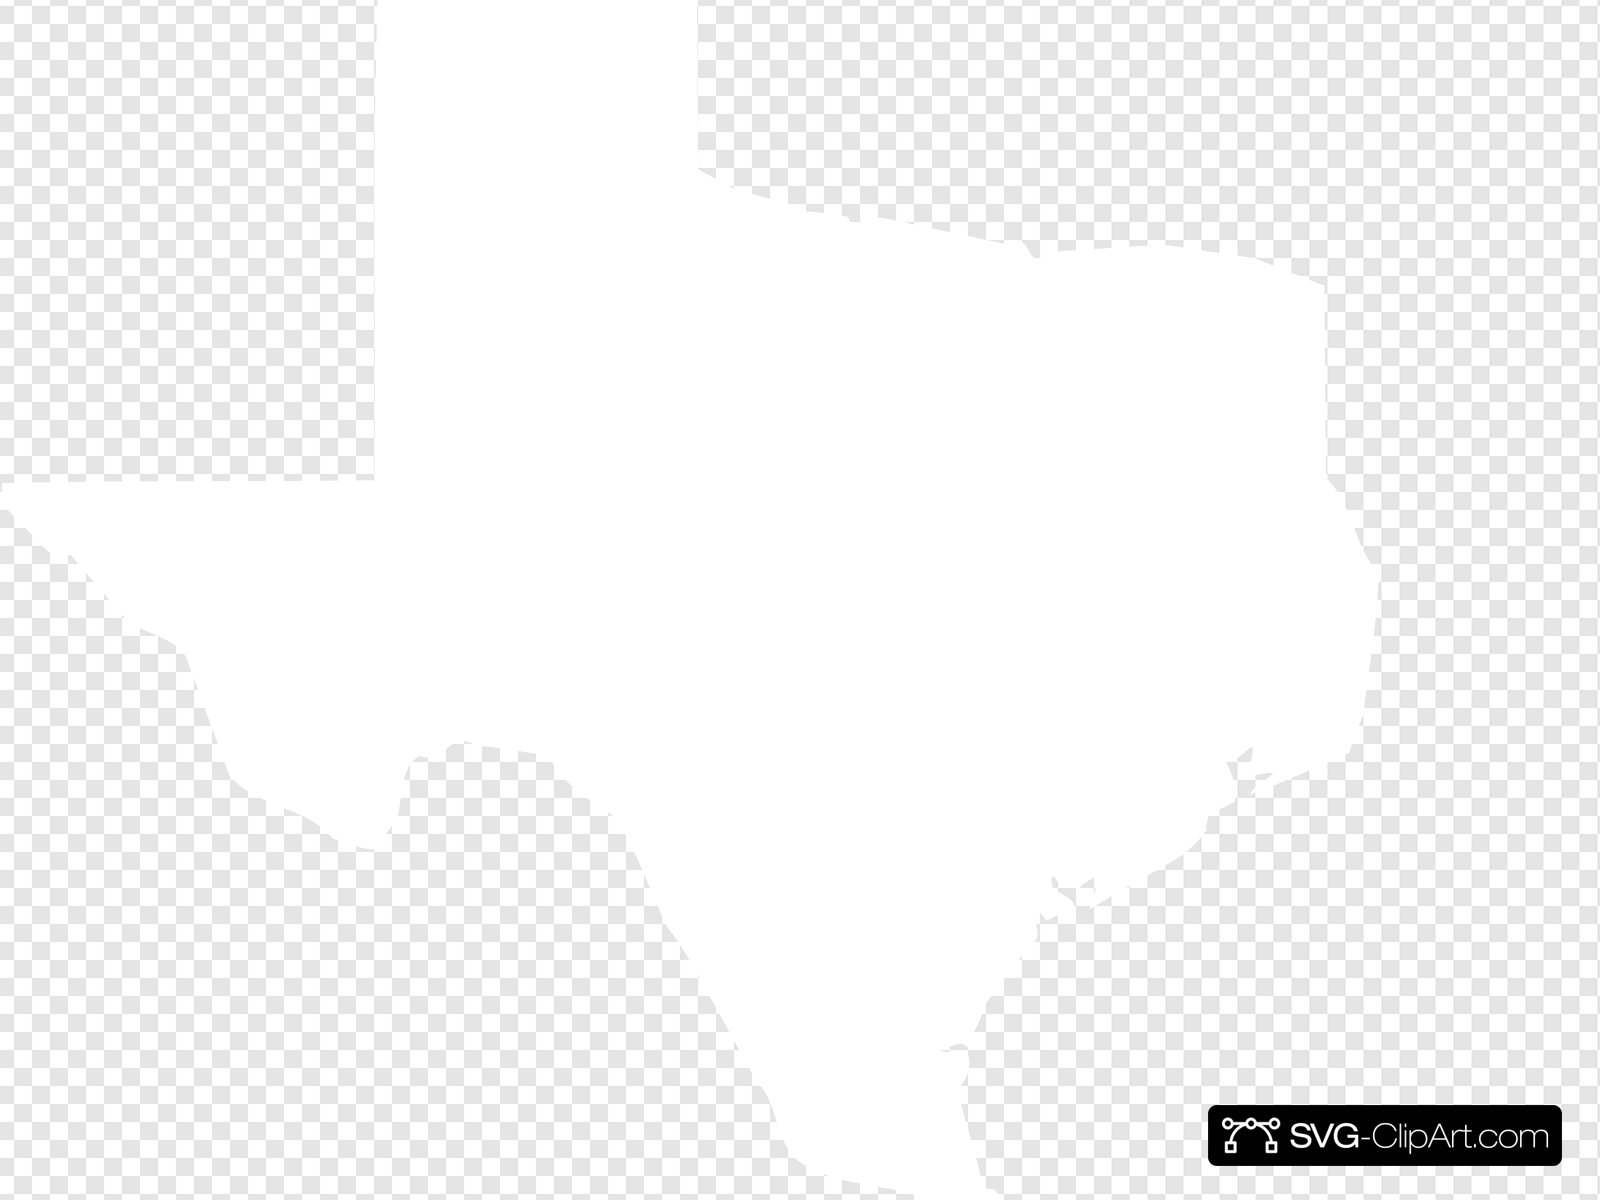 White Texas Clip art, Icon and SVG